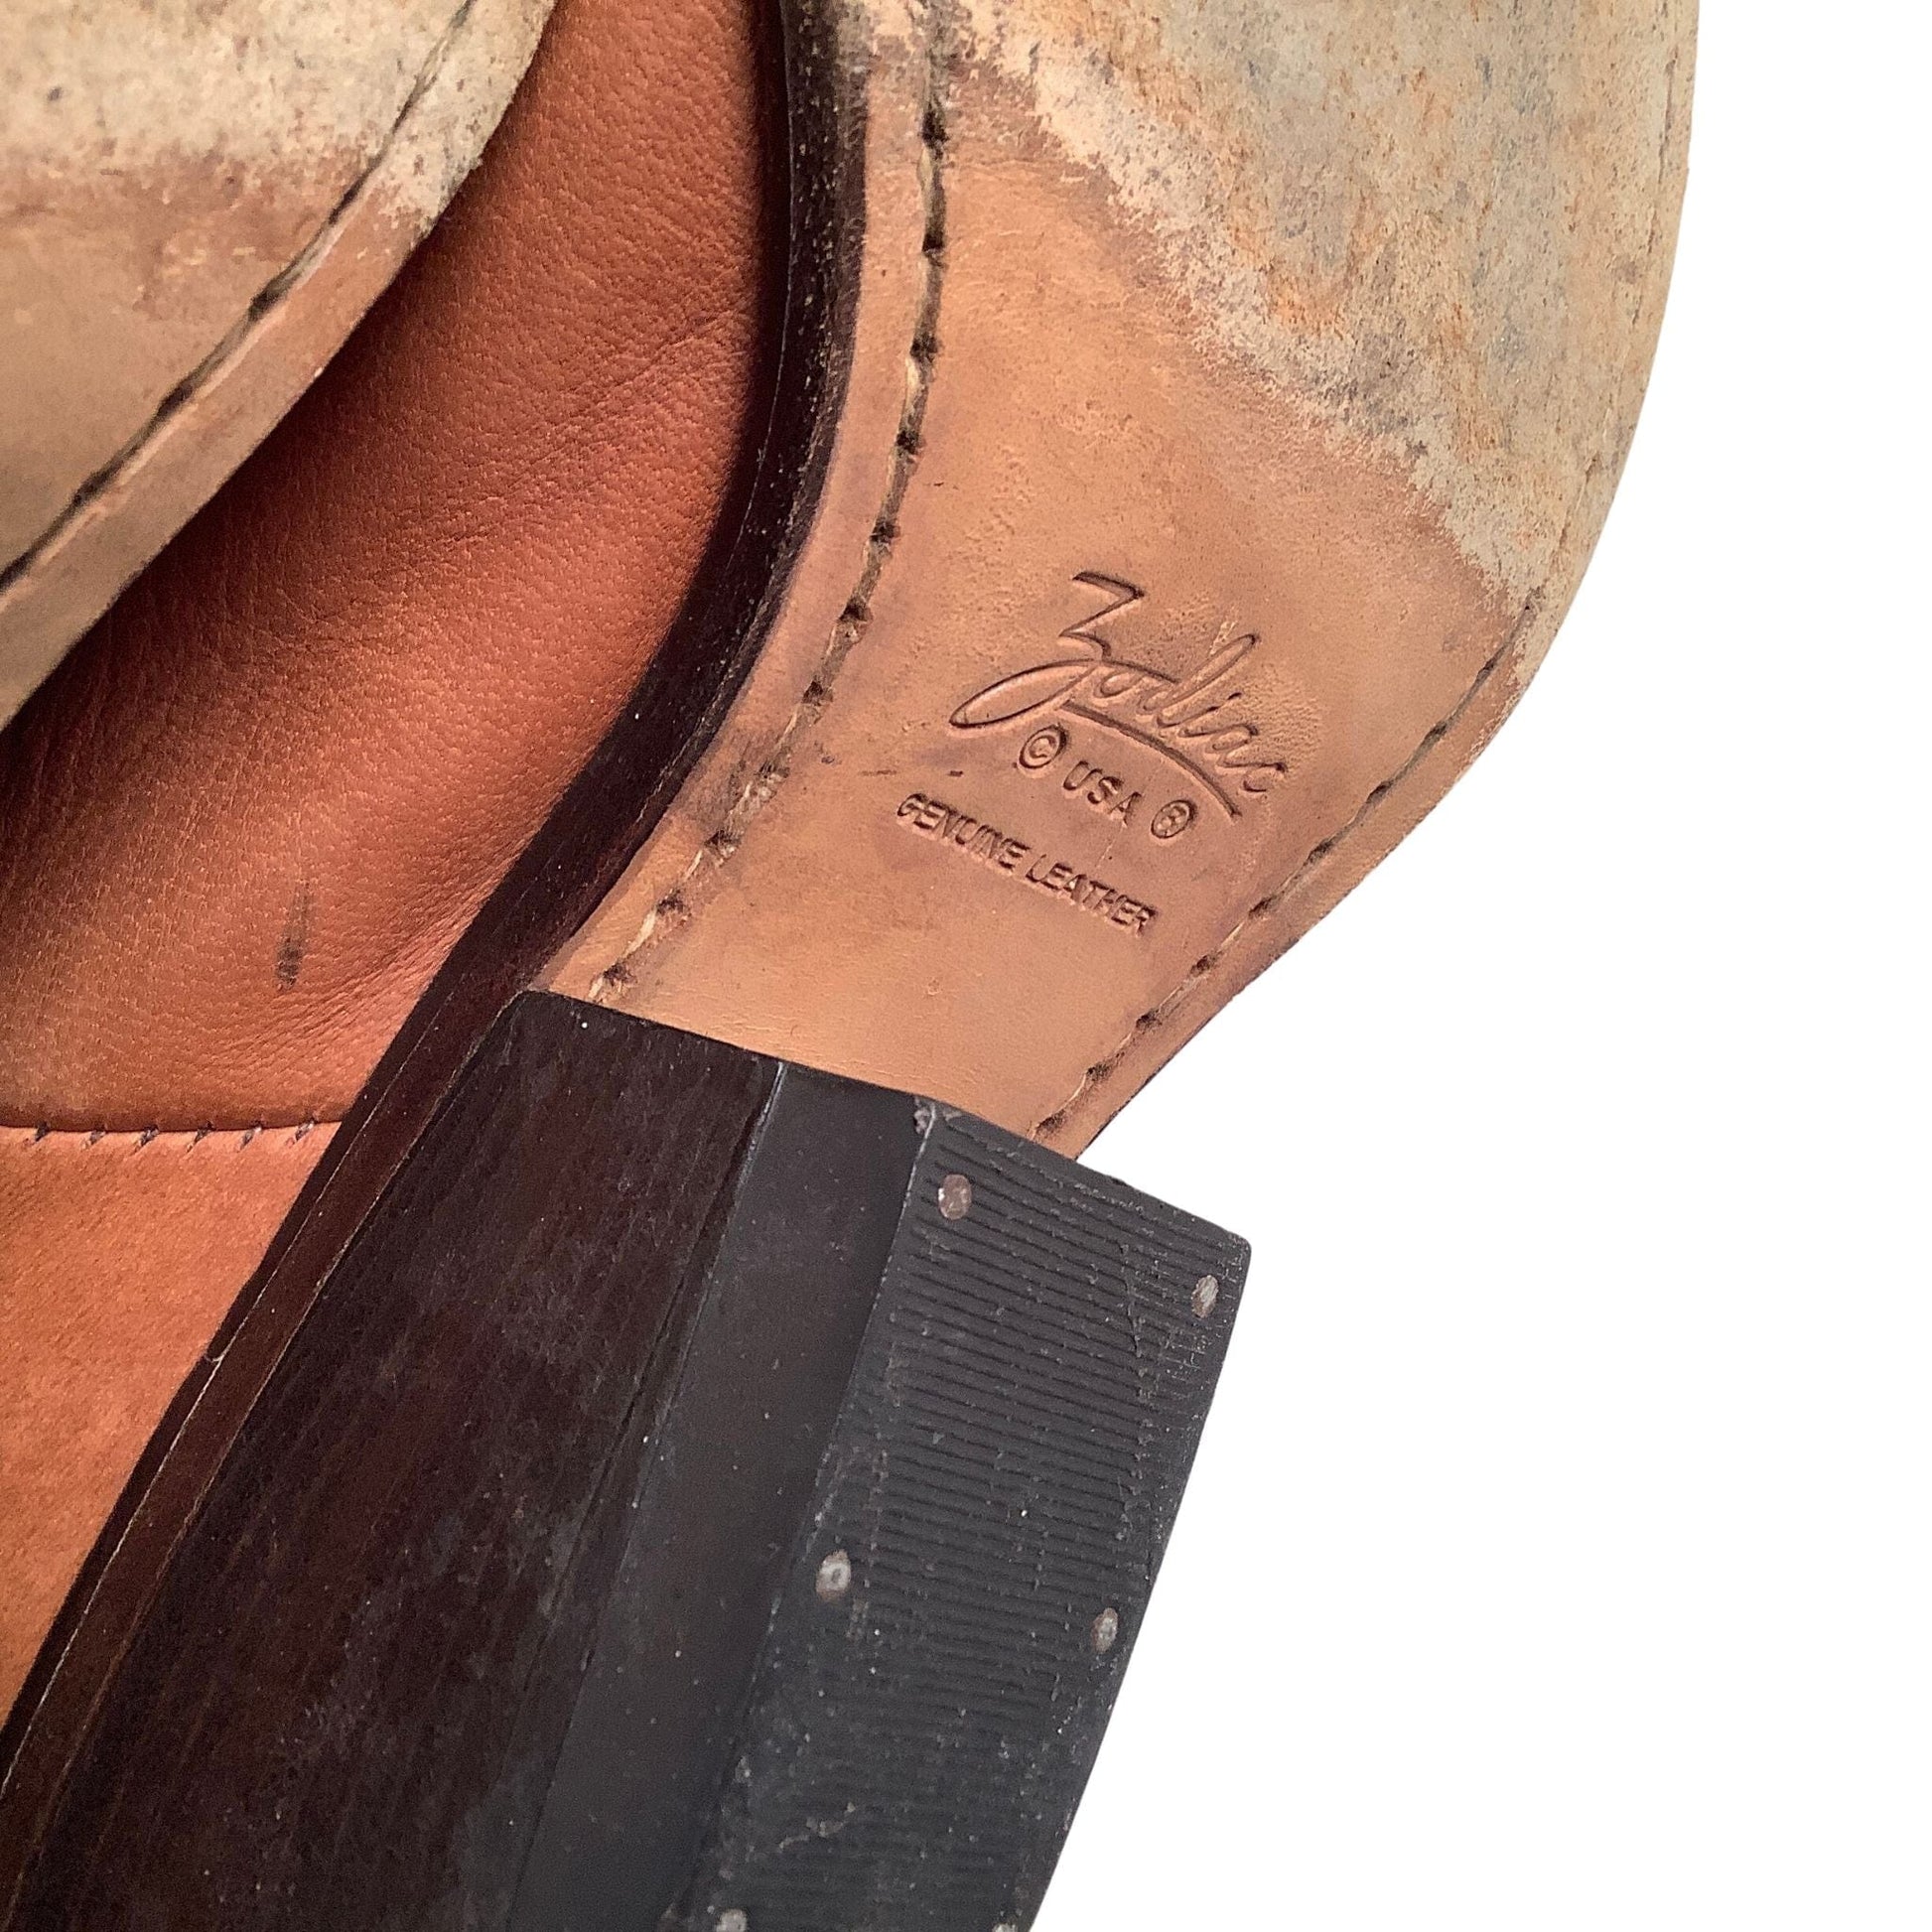 Zodiac Ankle Cowboy Boots 8.5 / Tan / Vintage 1980s